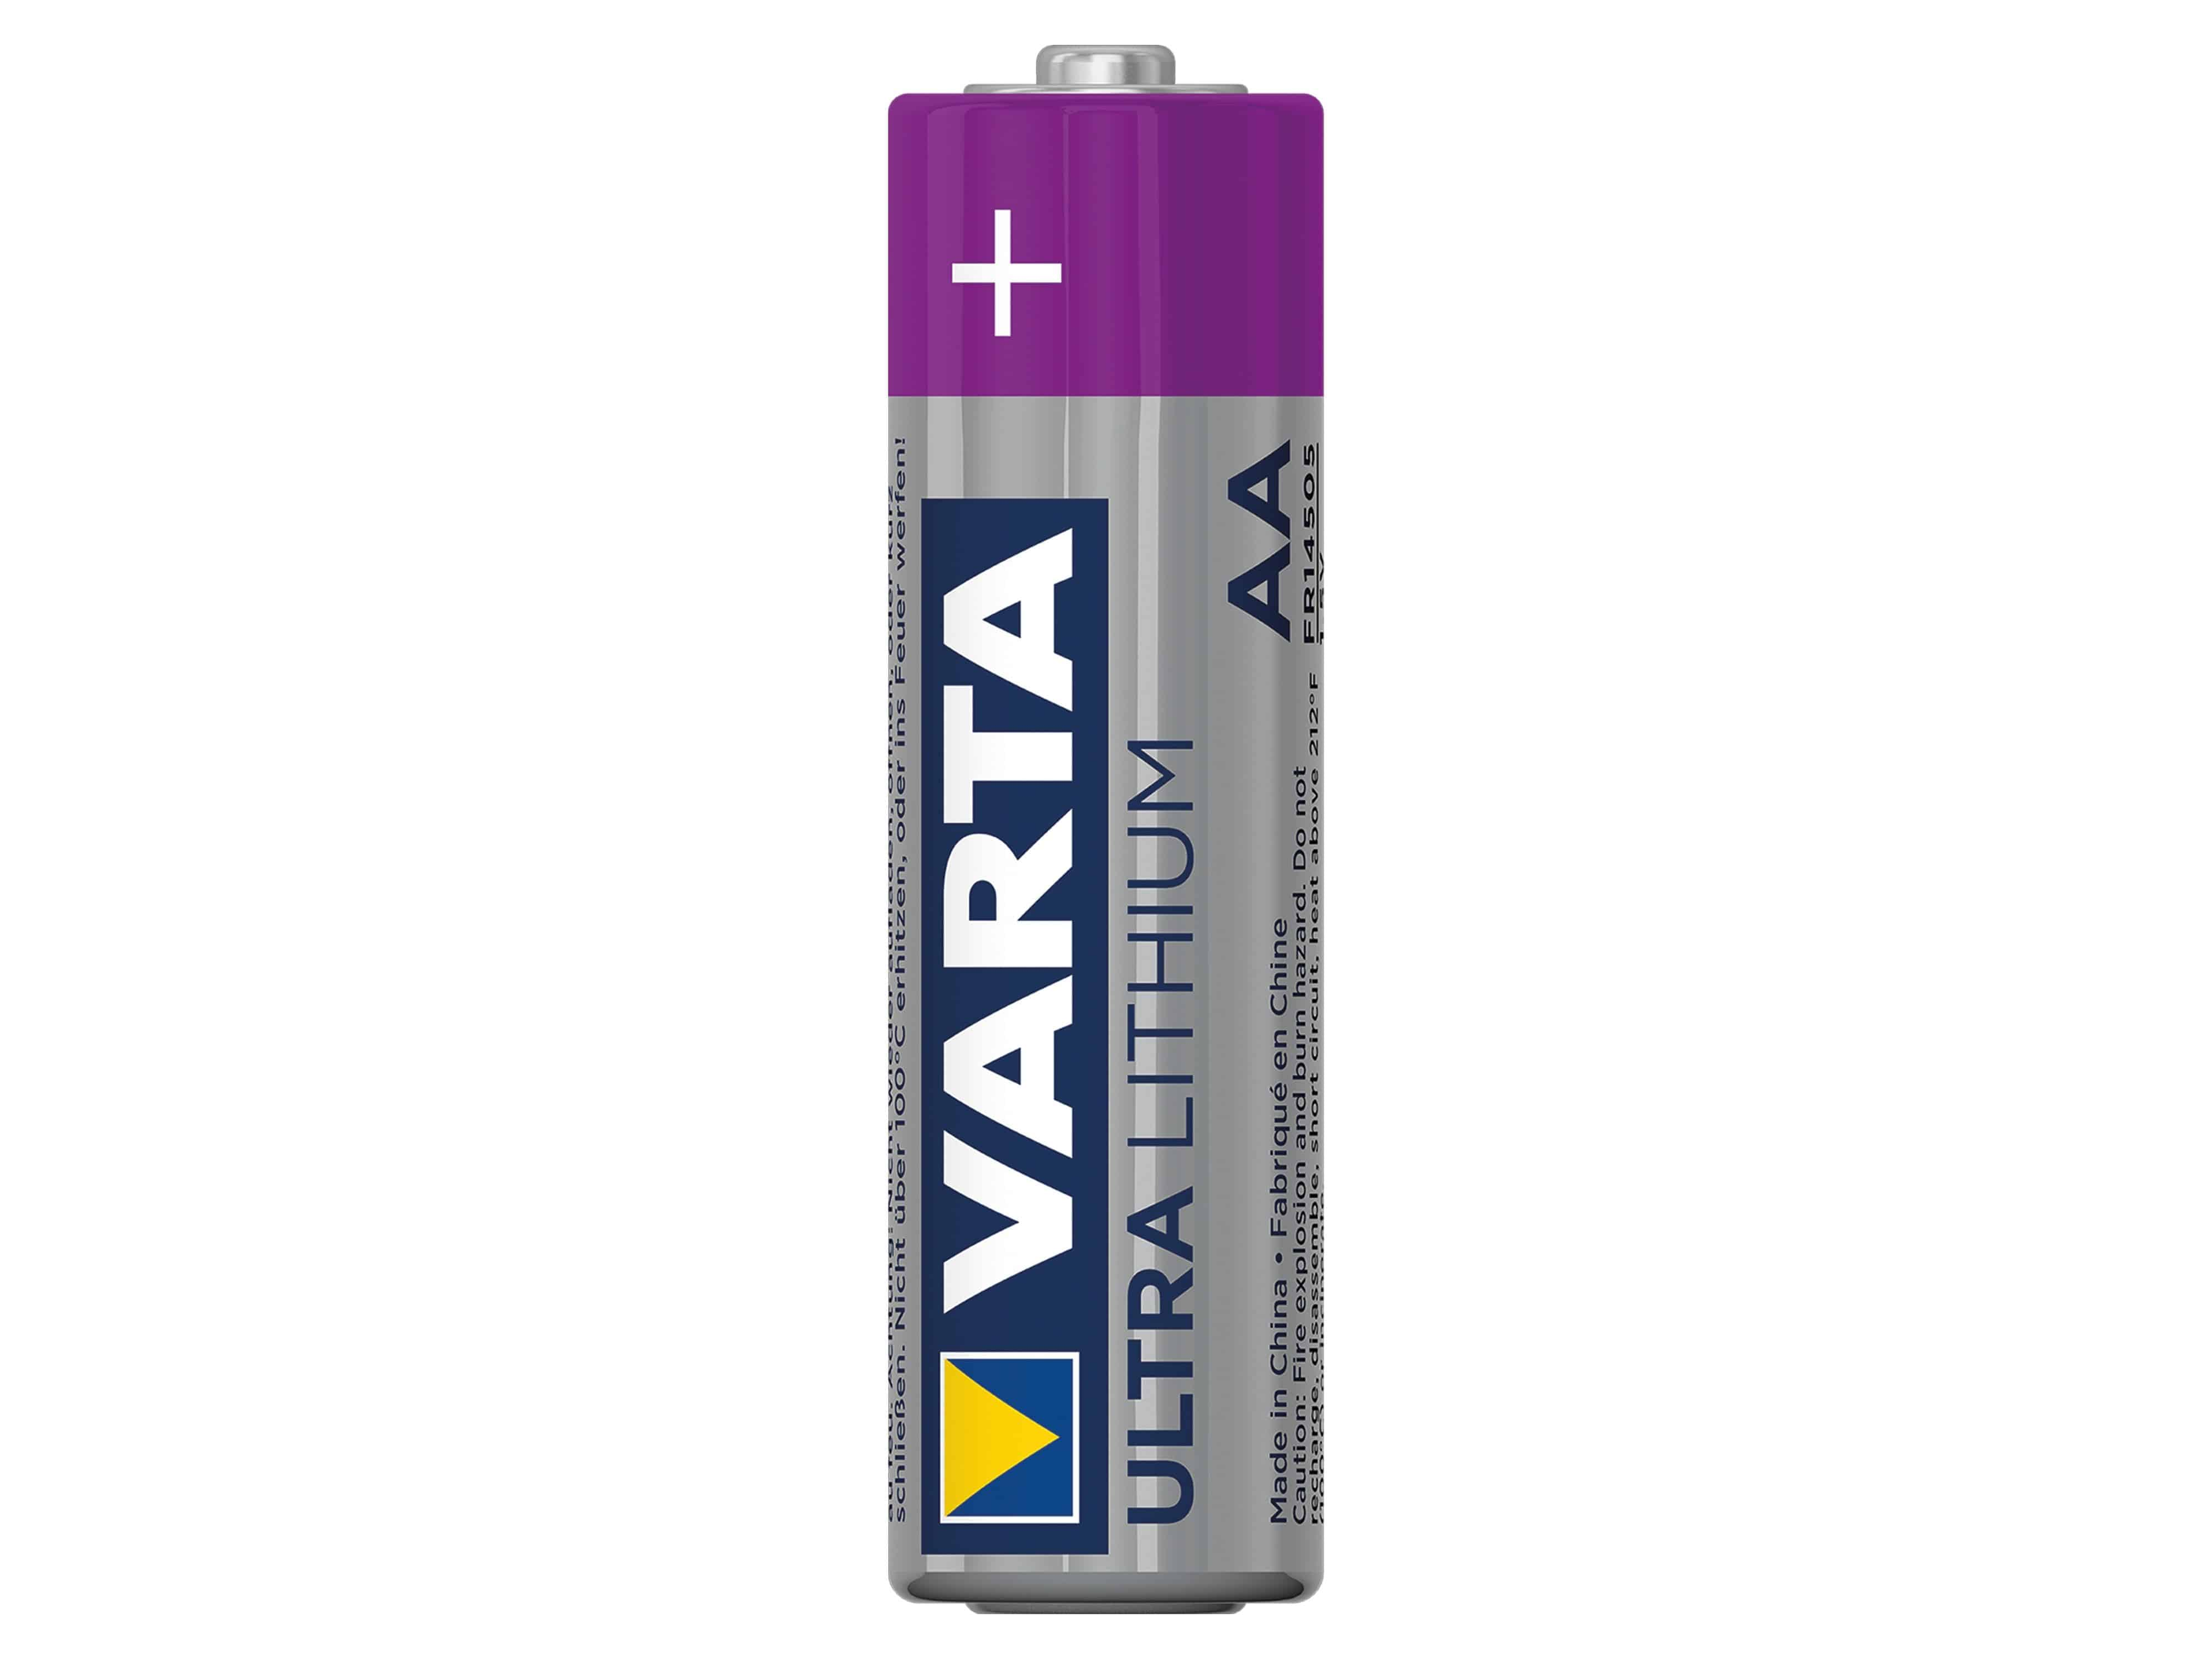 VARTA Lithium, Batterie Lithium Volt, 2.9 1.5 AA L91 Mignon Mando (4er Ah Blister) Ultra distancia Batterie,